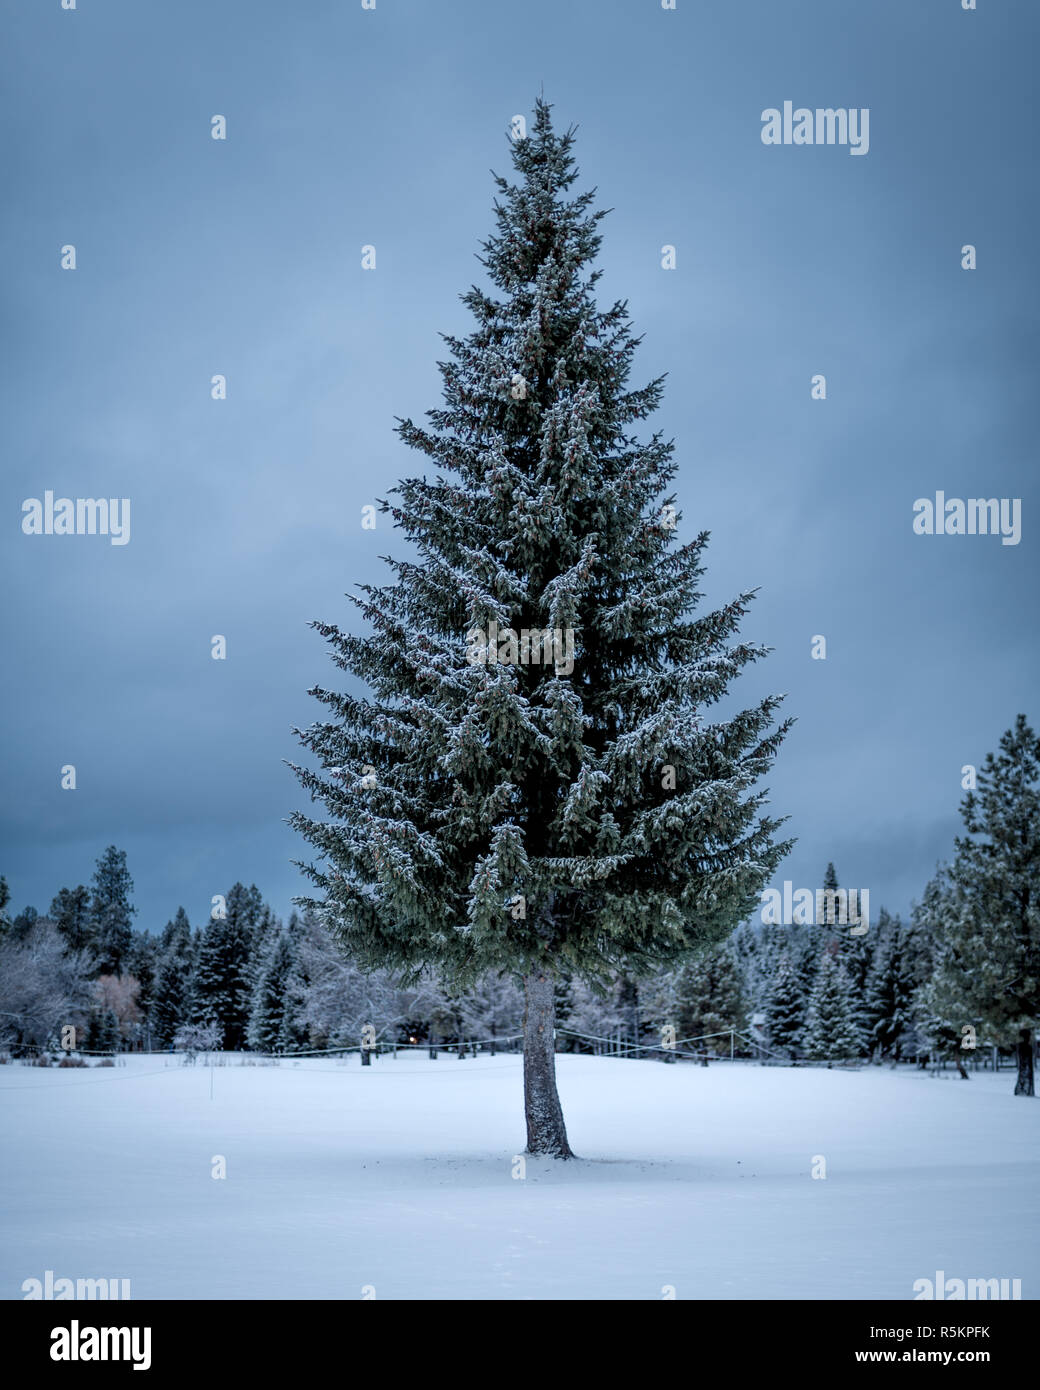 Charismas tree in a winter natural wonderland Stock Photo